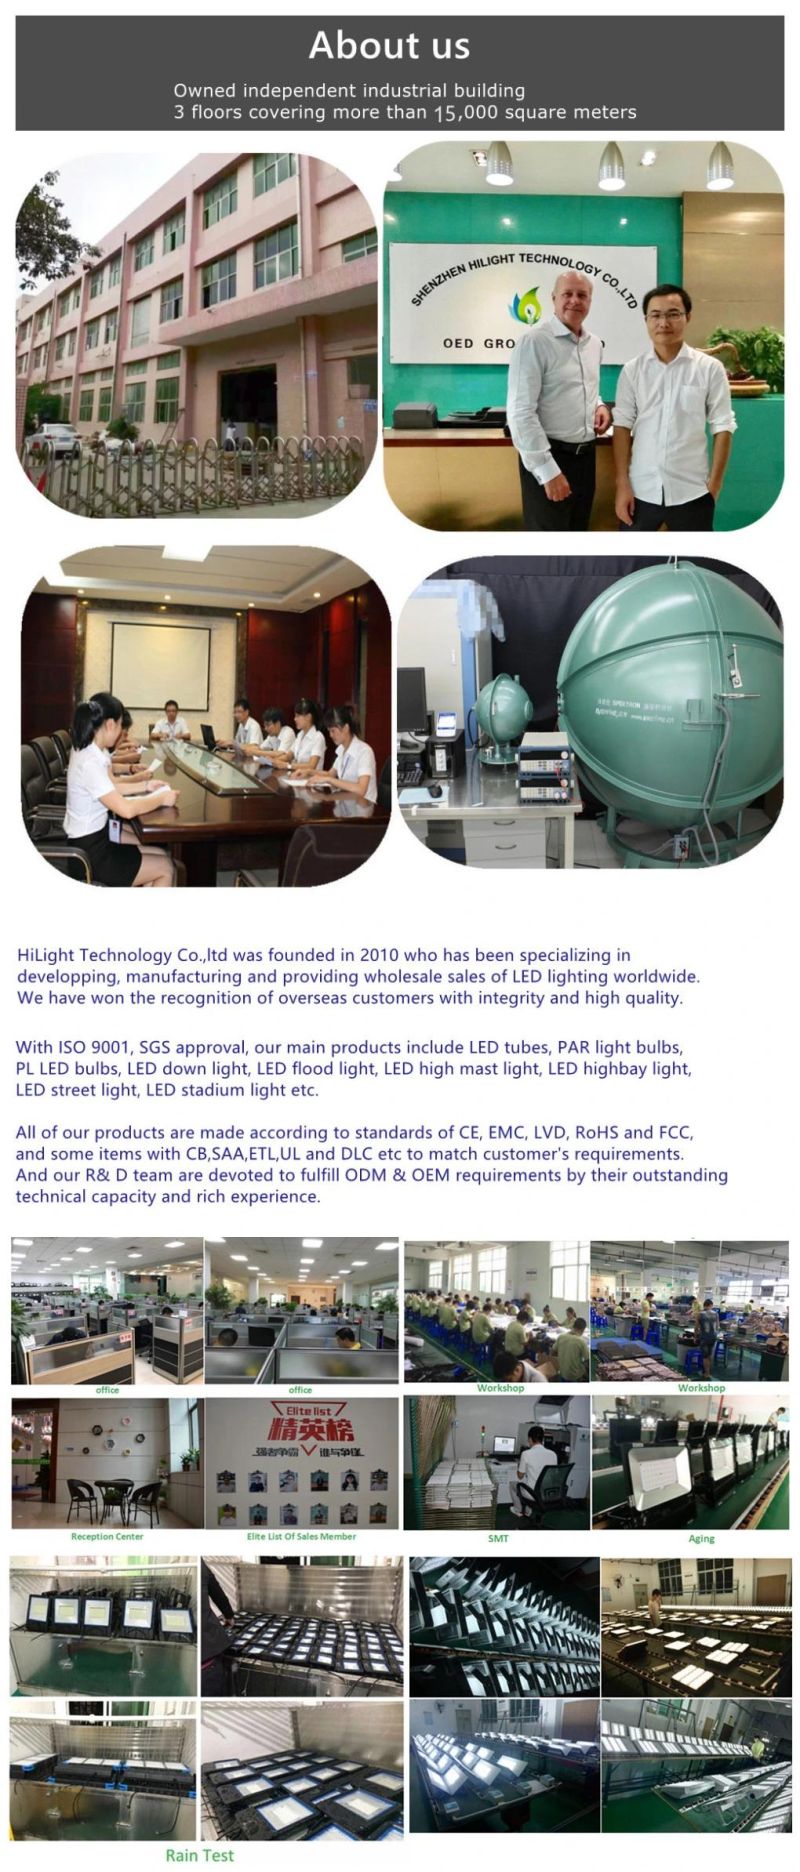 Chinese Trading Company 50W-500W All Wattage 400watt LED Flood Light Price for Circket Ground